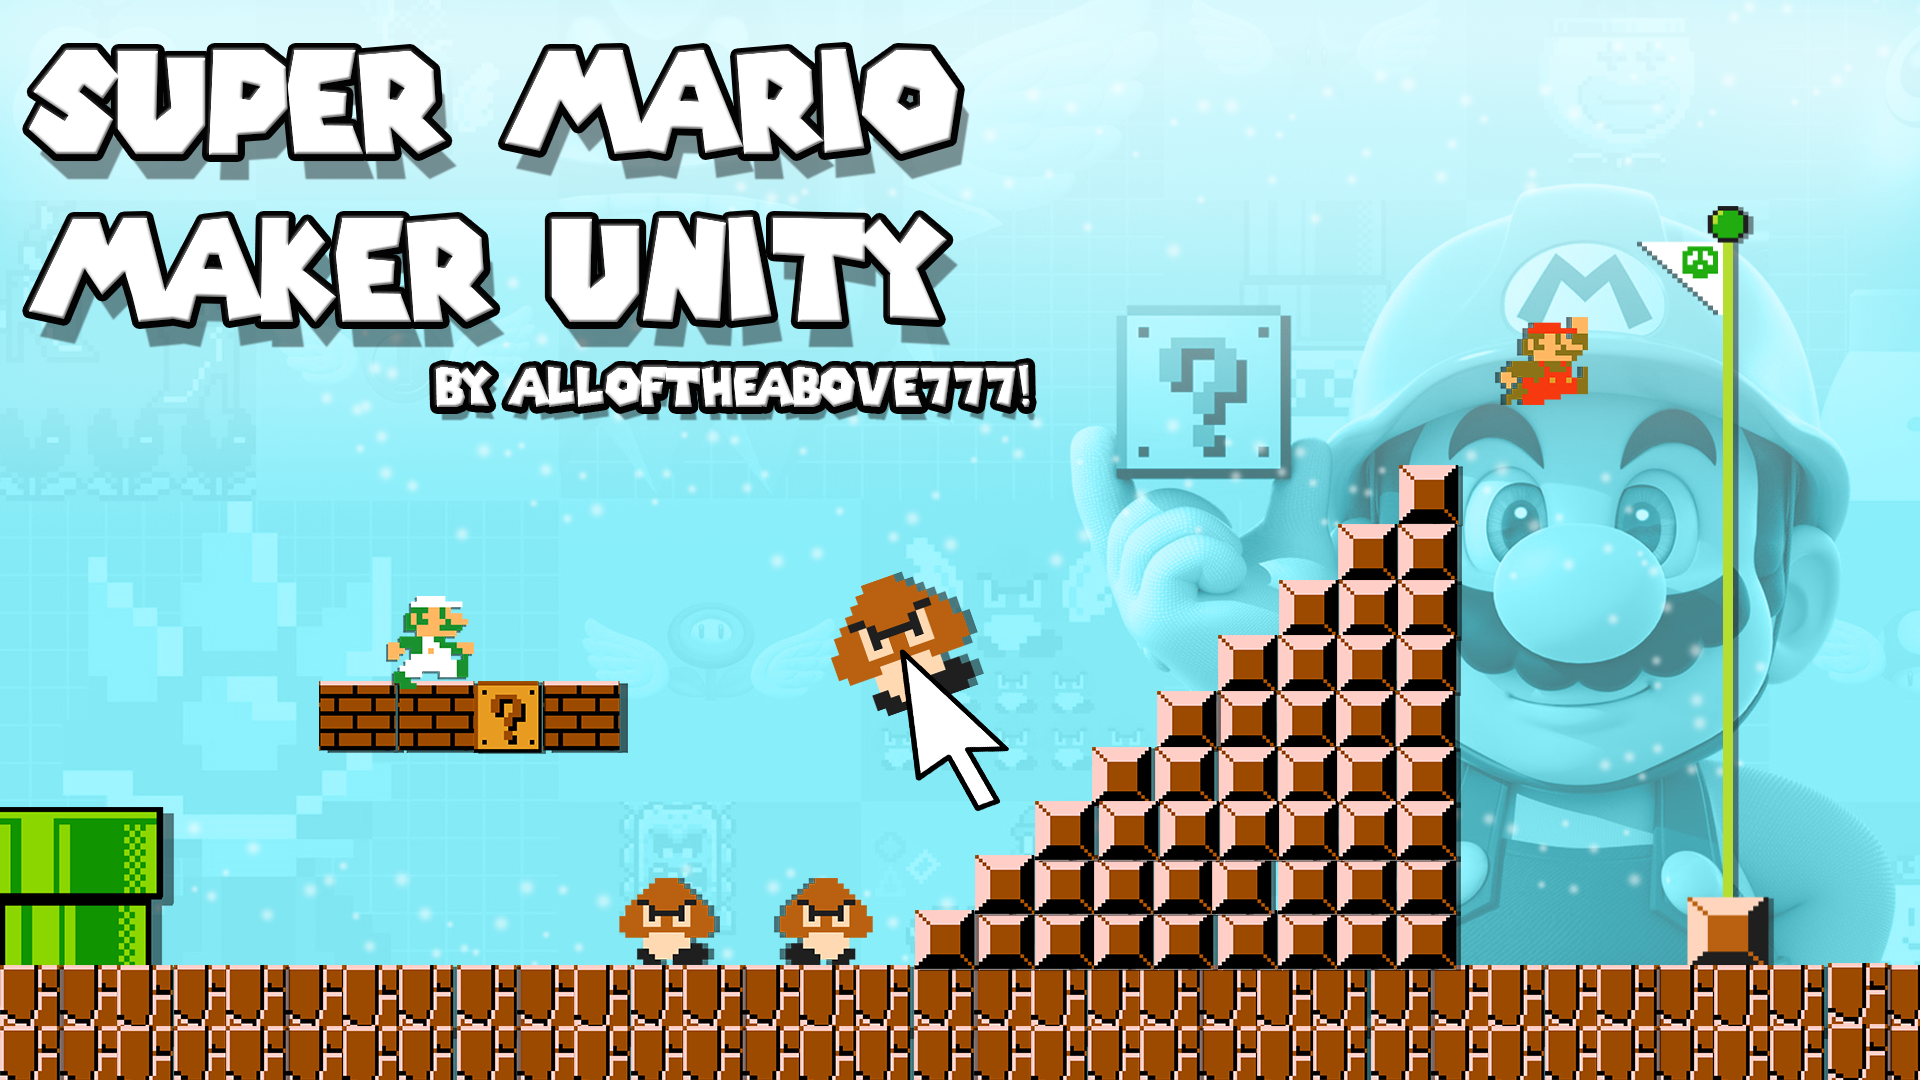 Super Mario Maker Unity!